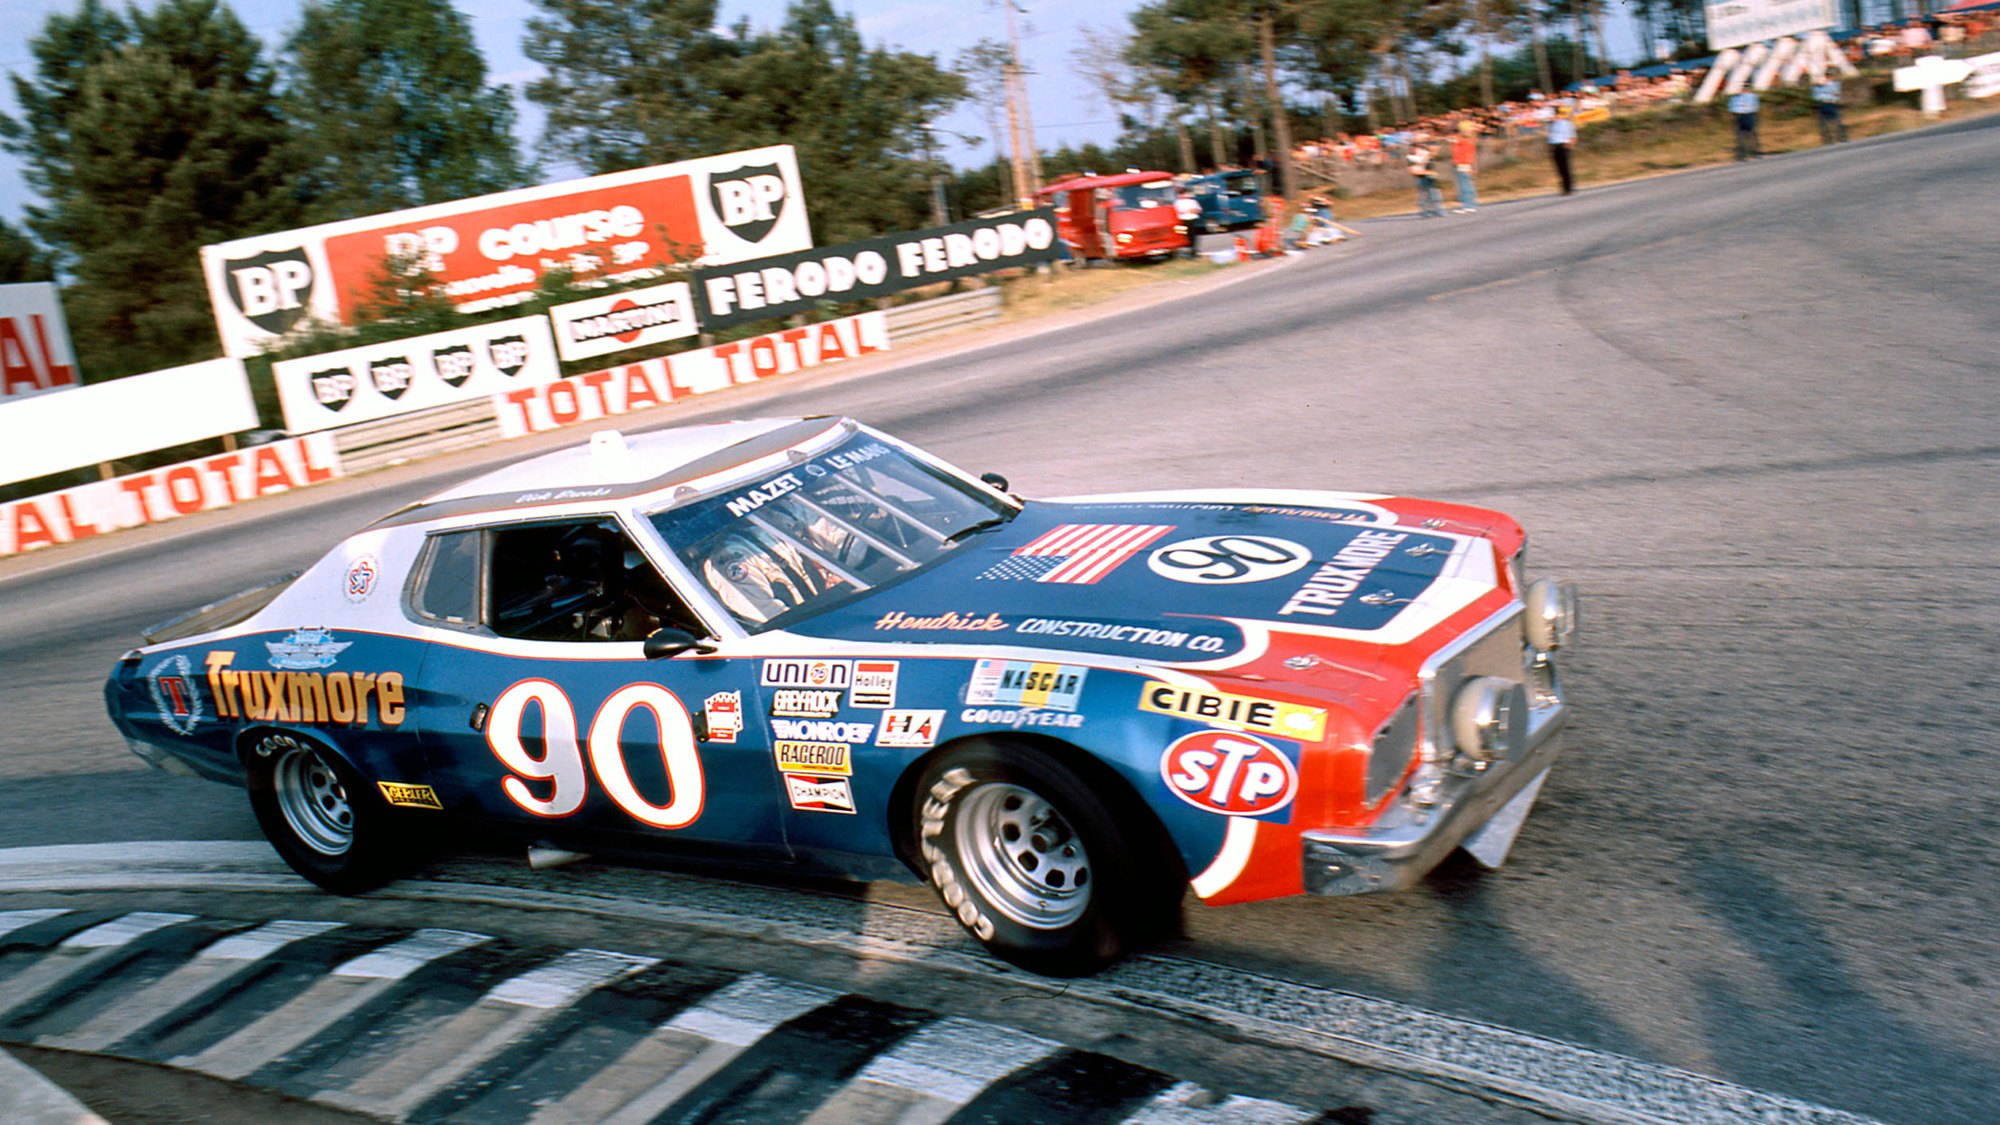 Ford-Torino-NASCAR-at-Le-Mans-in-1976.jpg